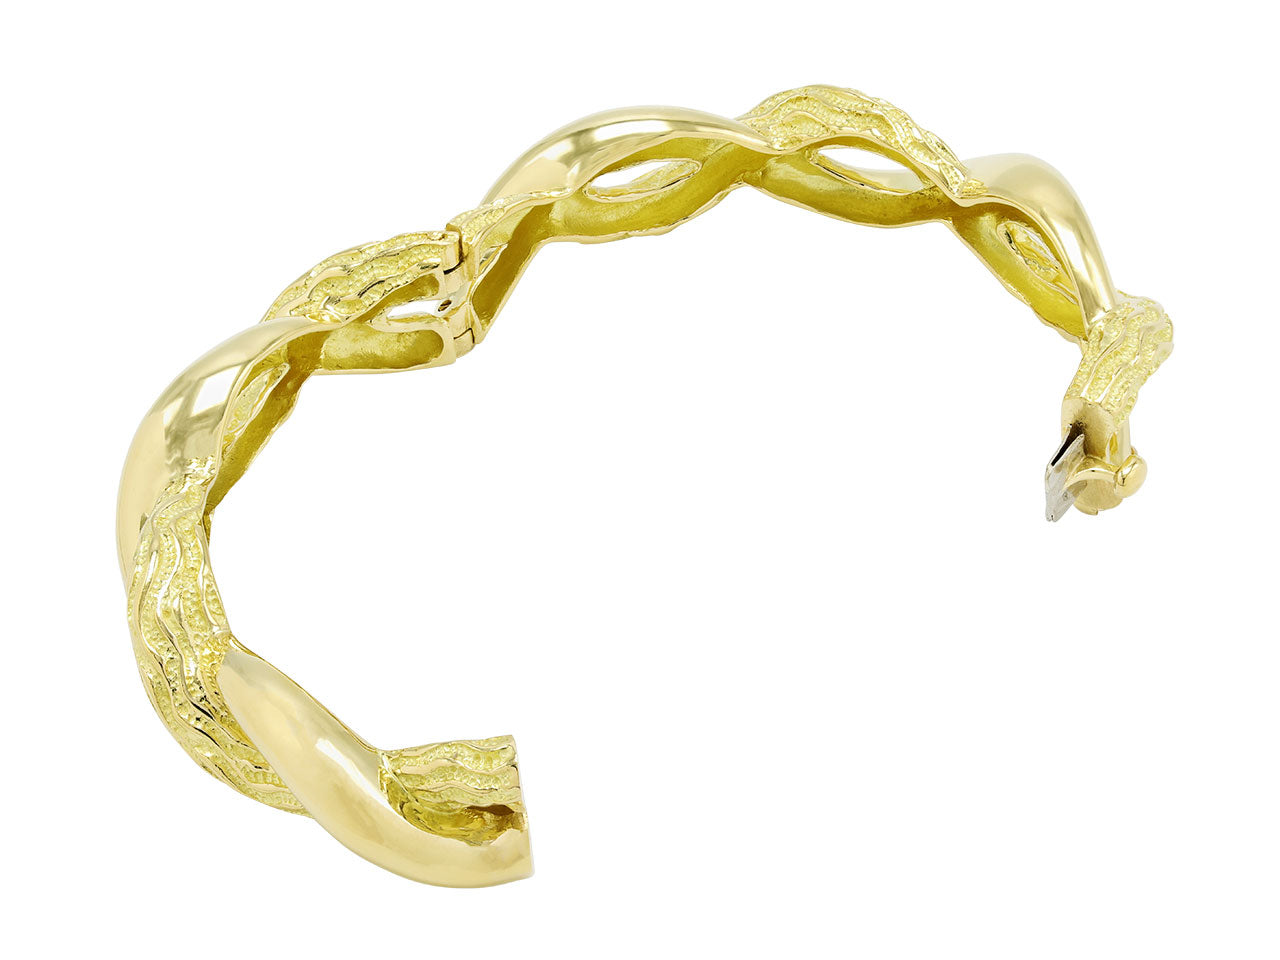 Tiffany & Co. Vintage Bangle Bracelet in 18K Gold